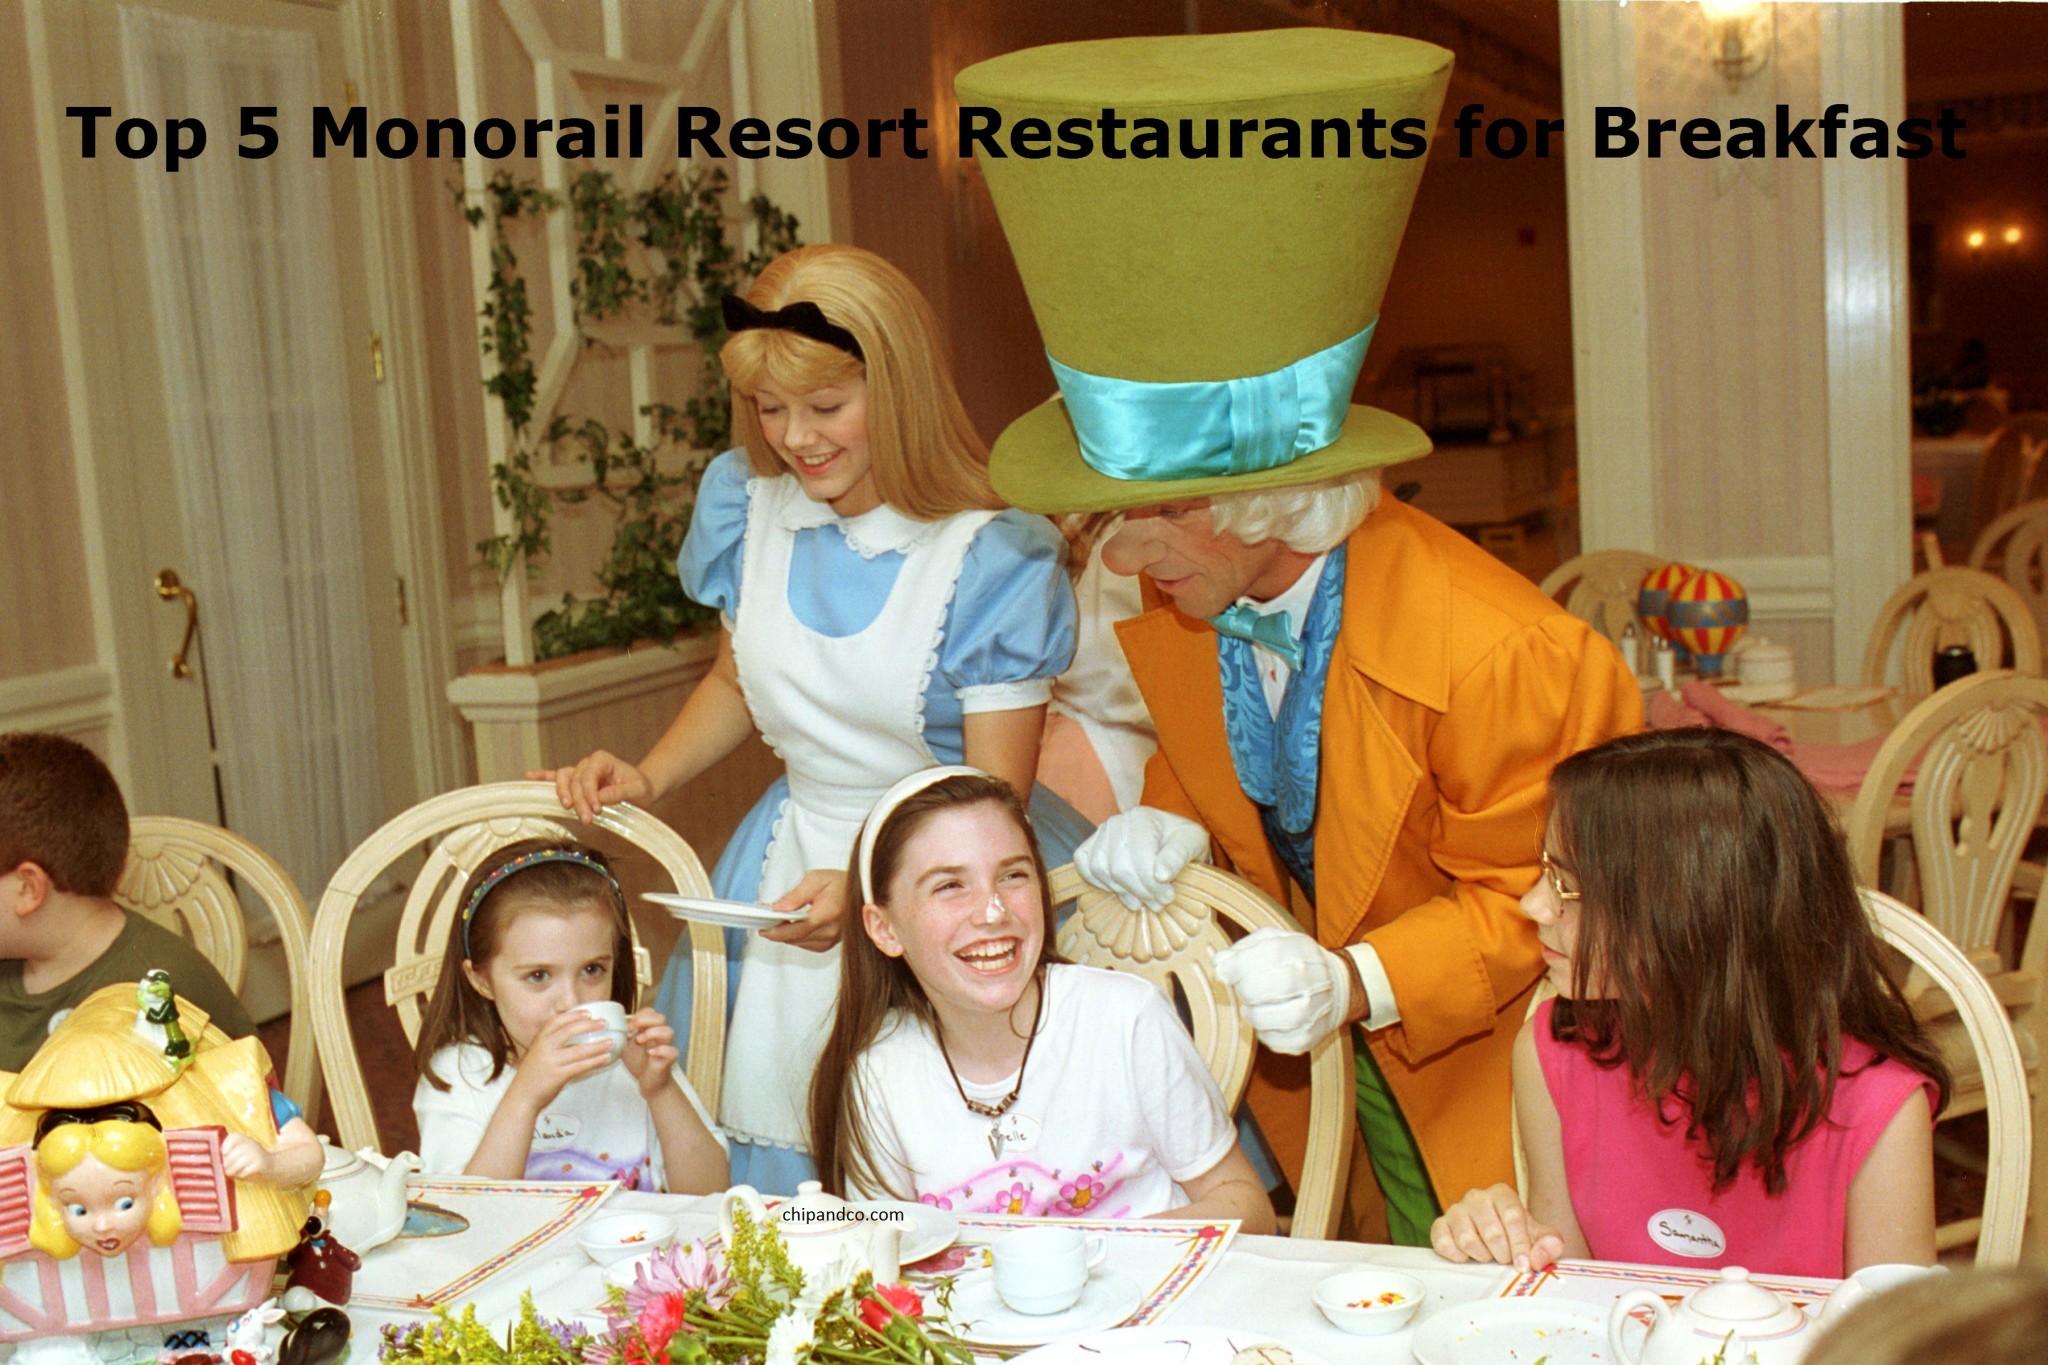 Top 5 Monorail Resort Restaurants for Breakfast